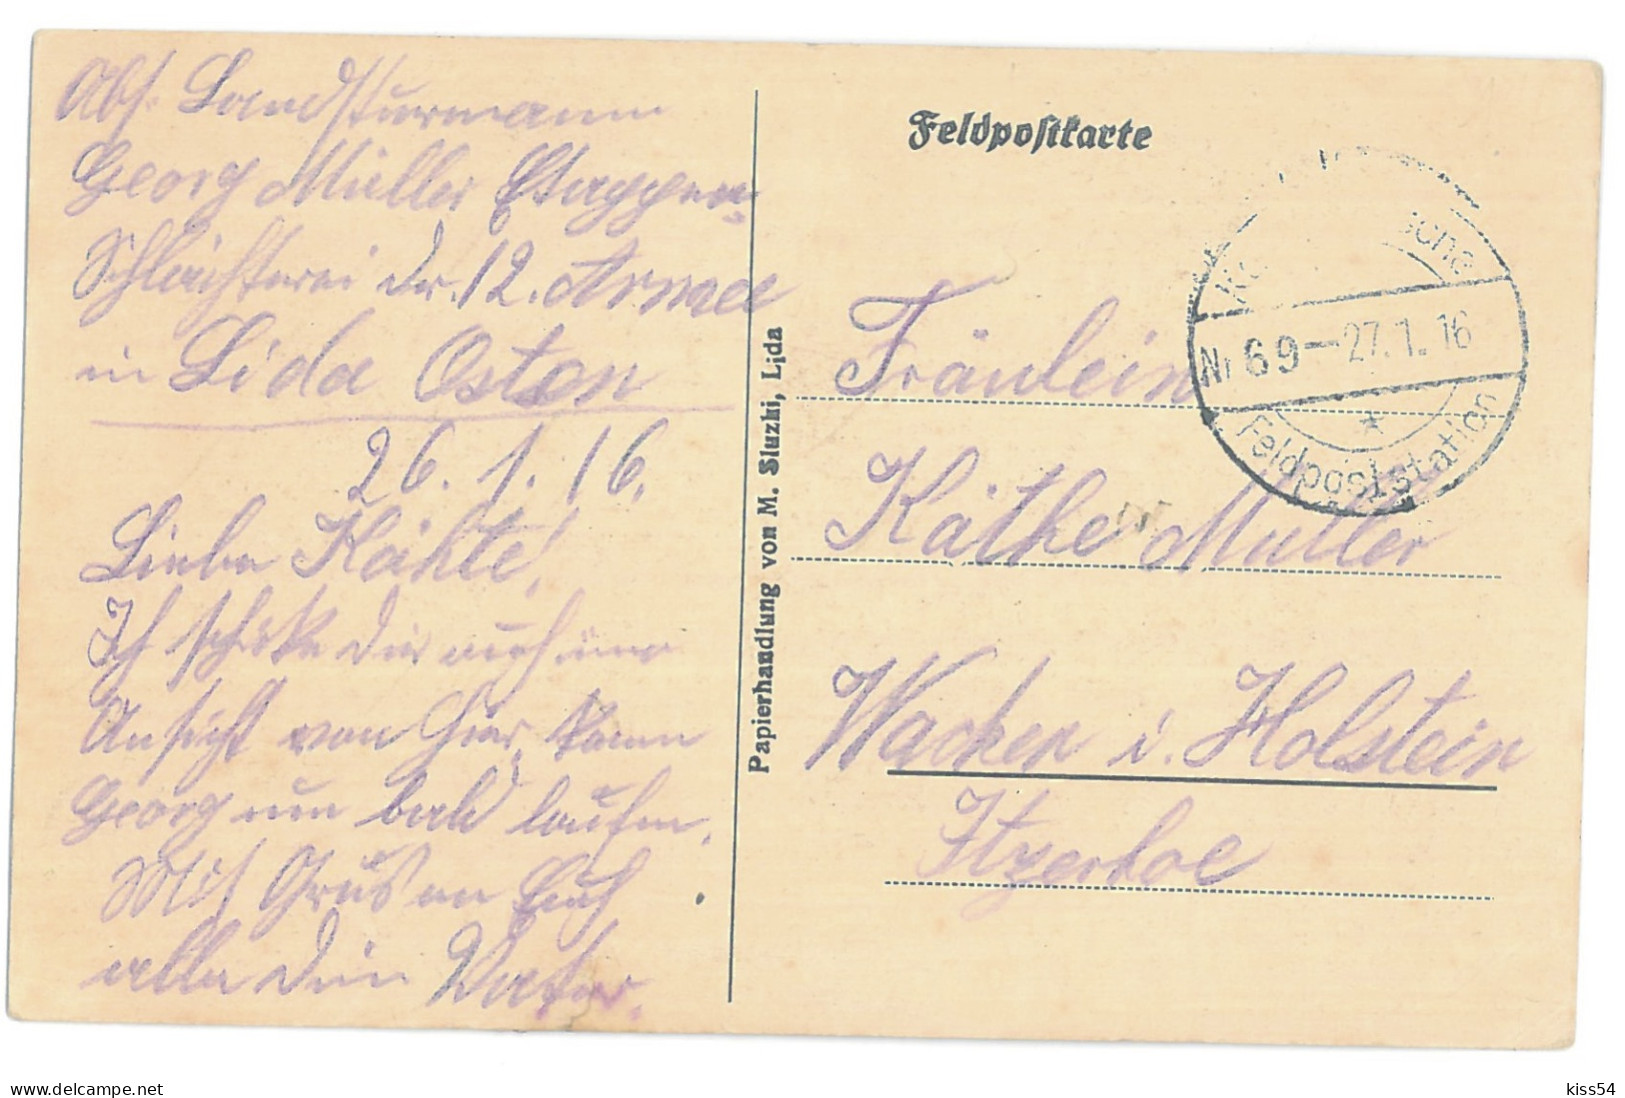 BL 32 - 14637 LIDA, House In Fire, Belarus - Old Postcard, CENSOR - Used - 1916 - Weißrussland